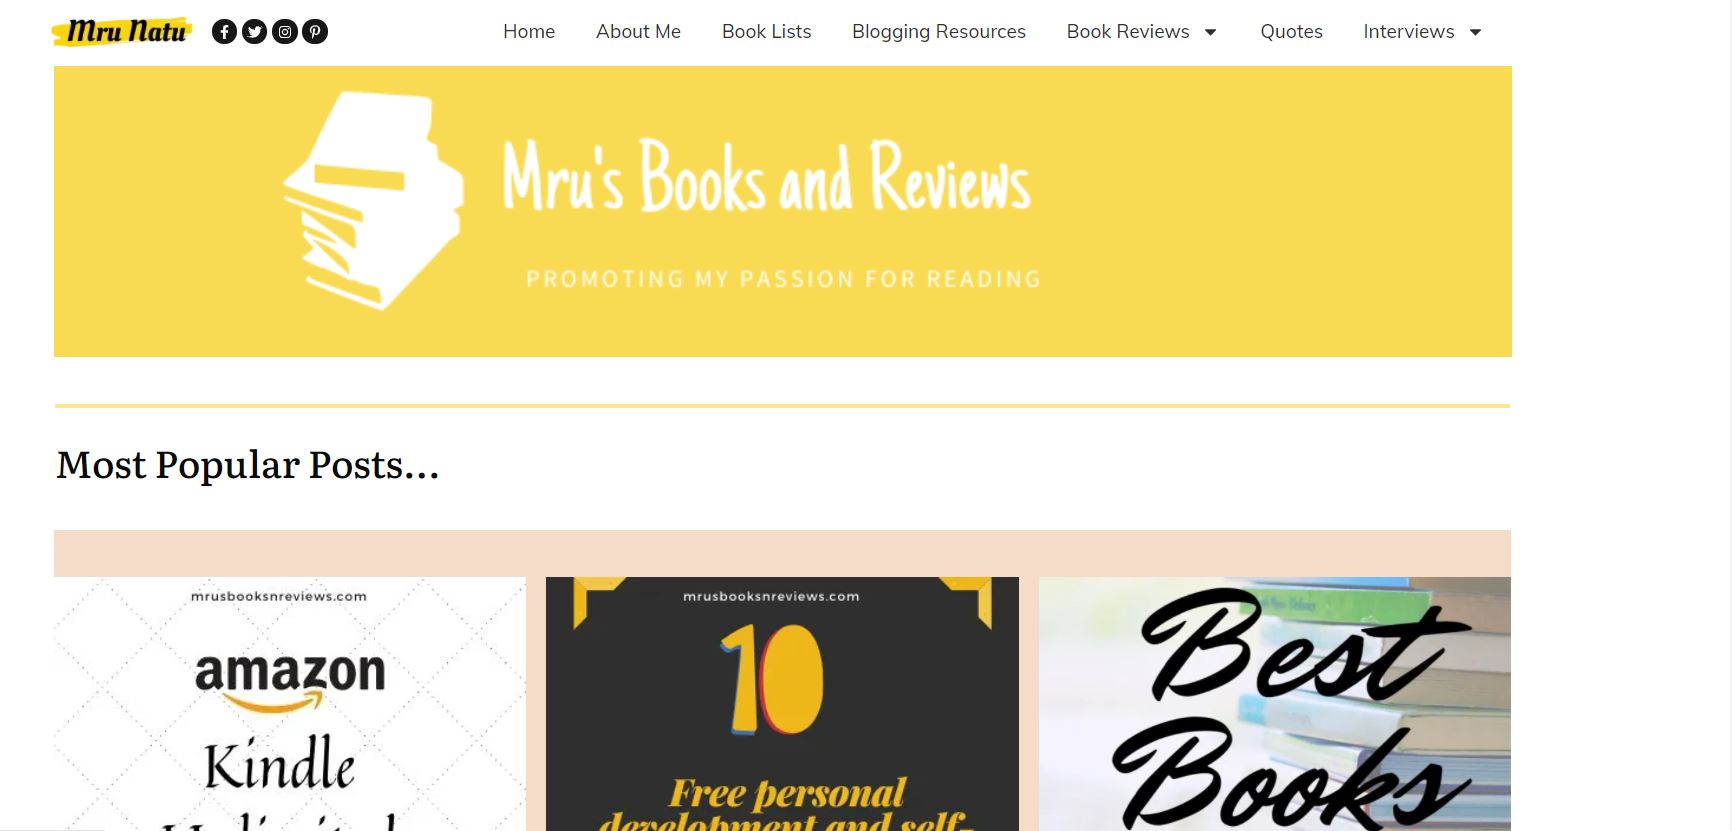 Mru's Books and Reviews